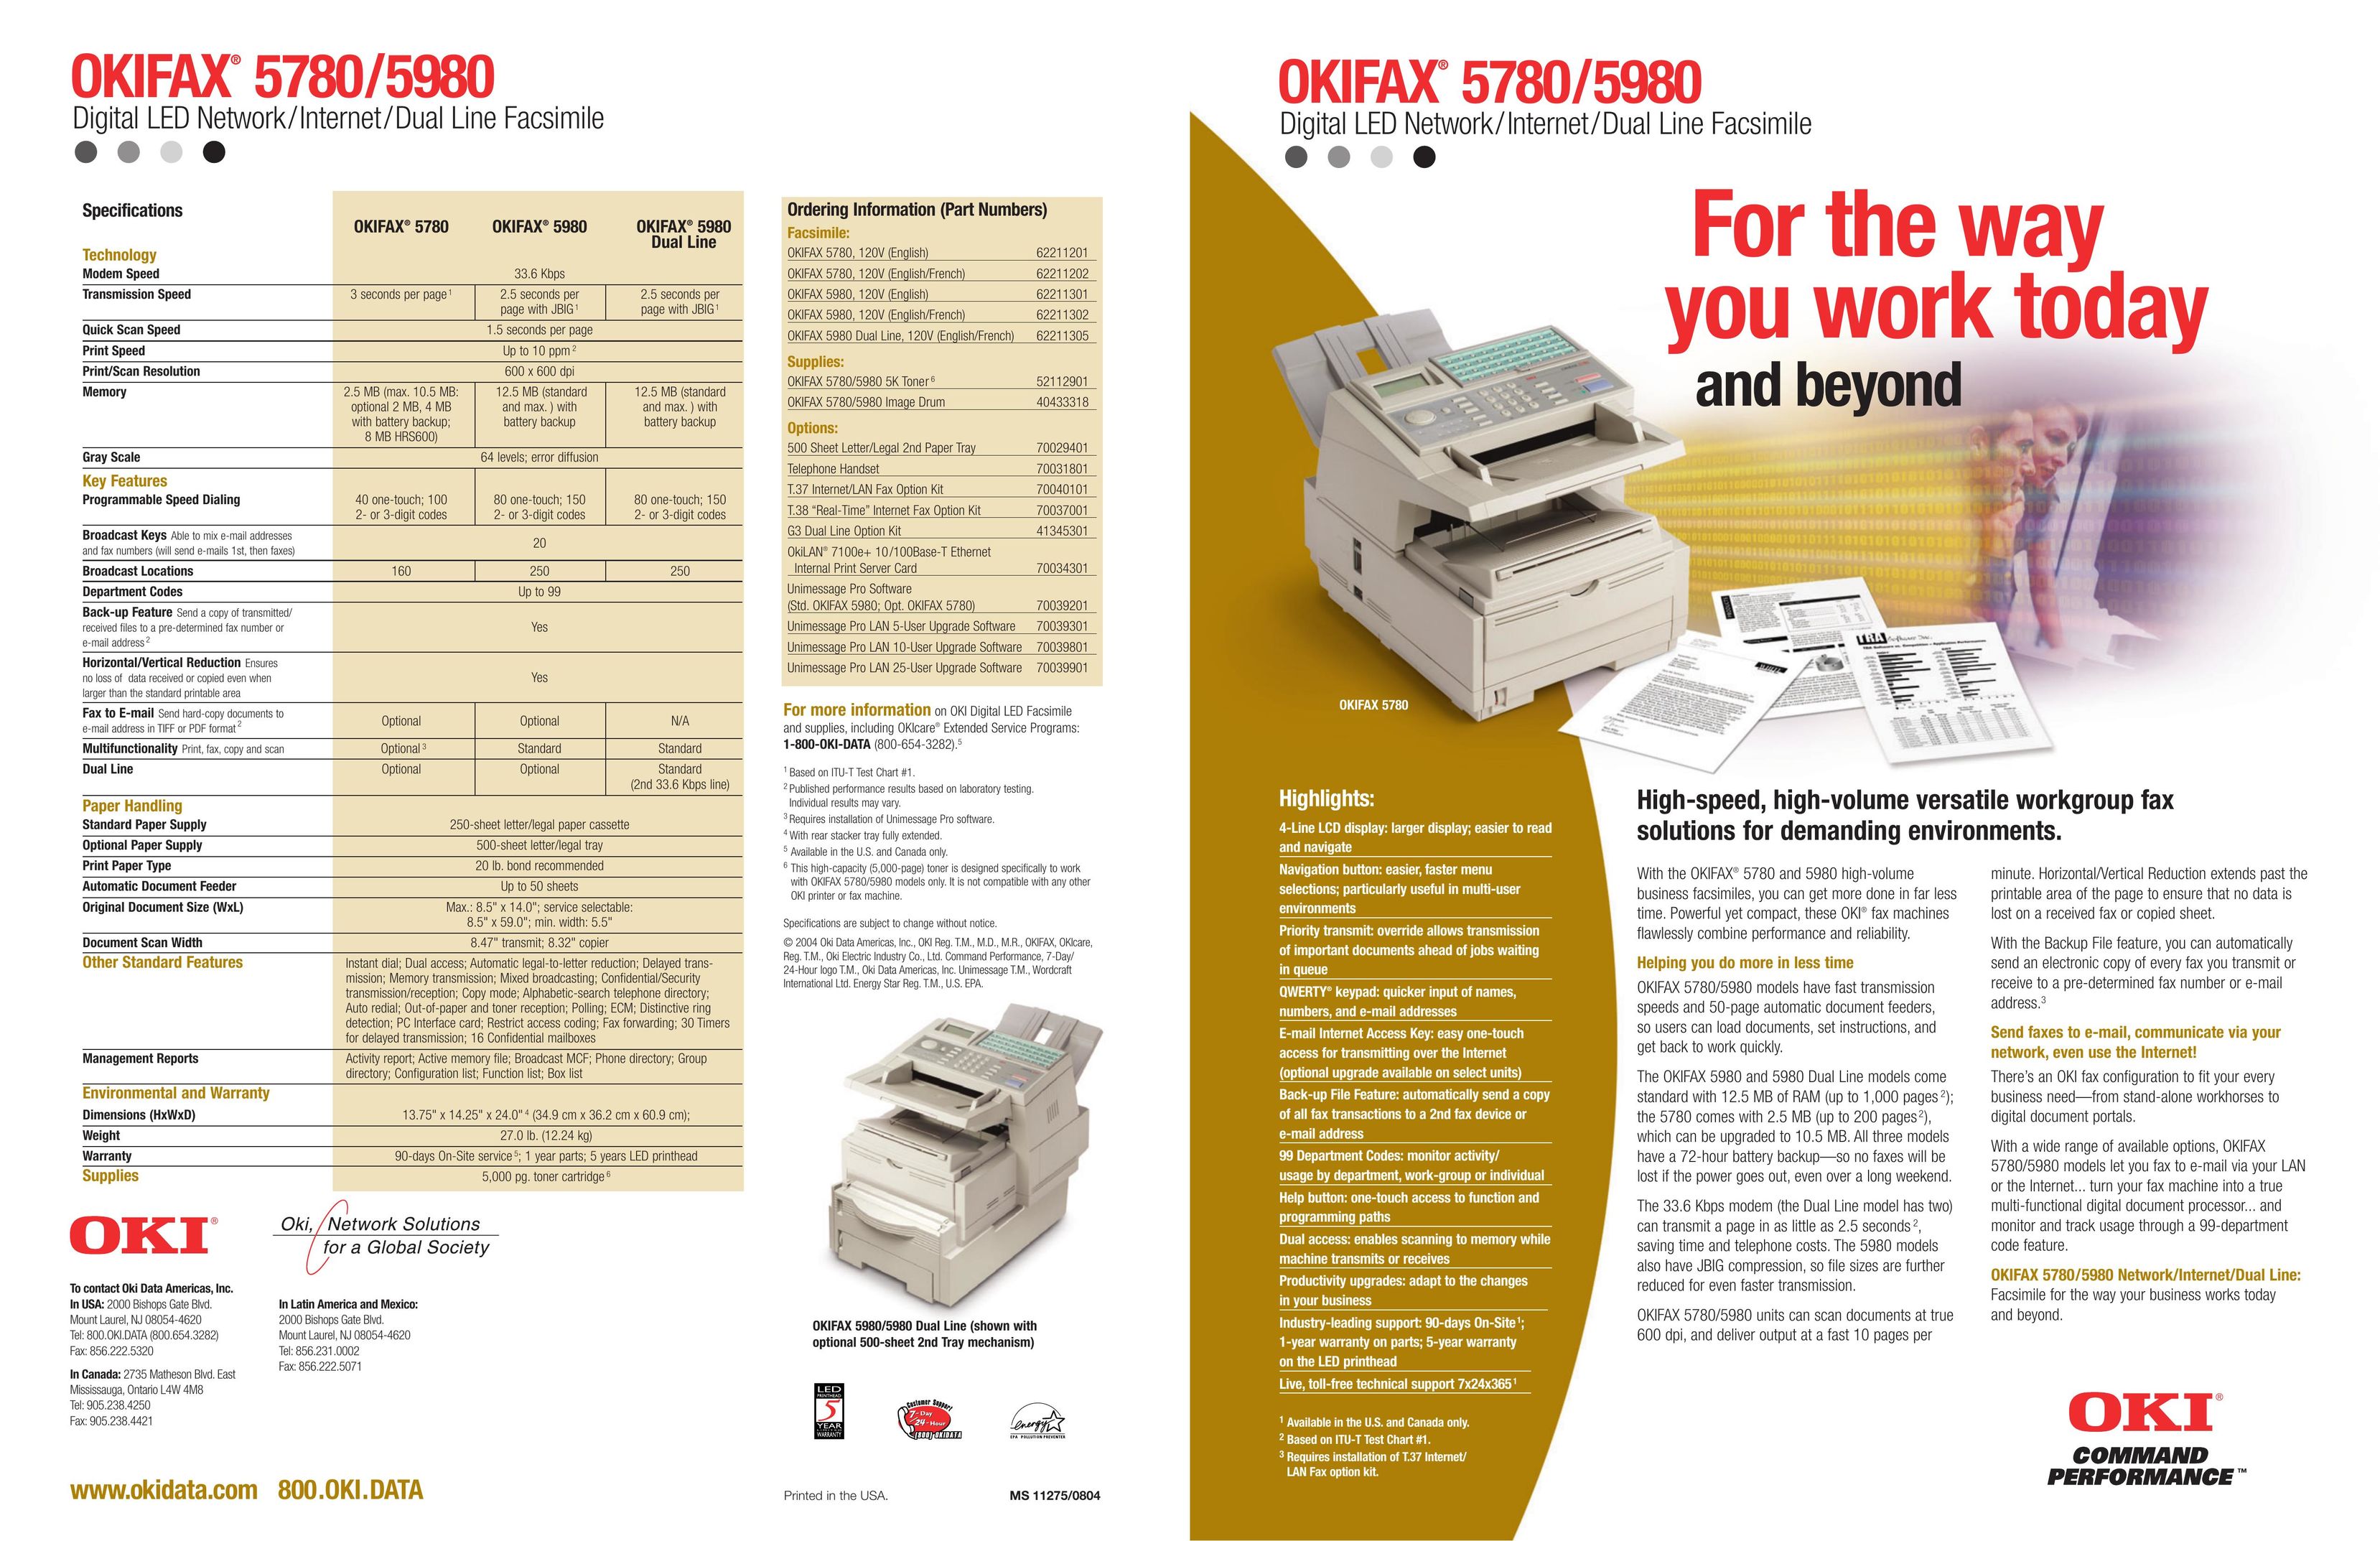 Oki 5980 Fax Machine User Manual